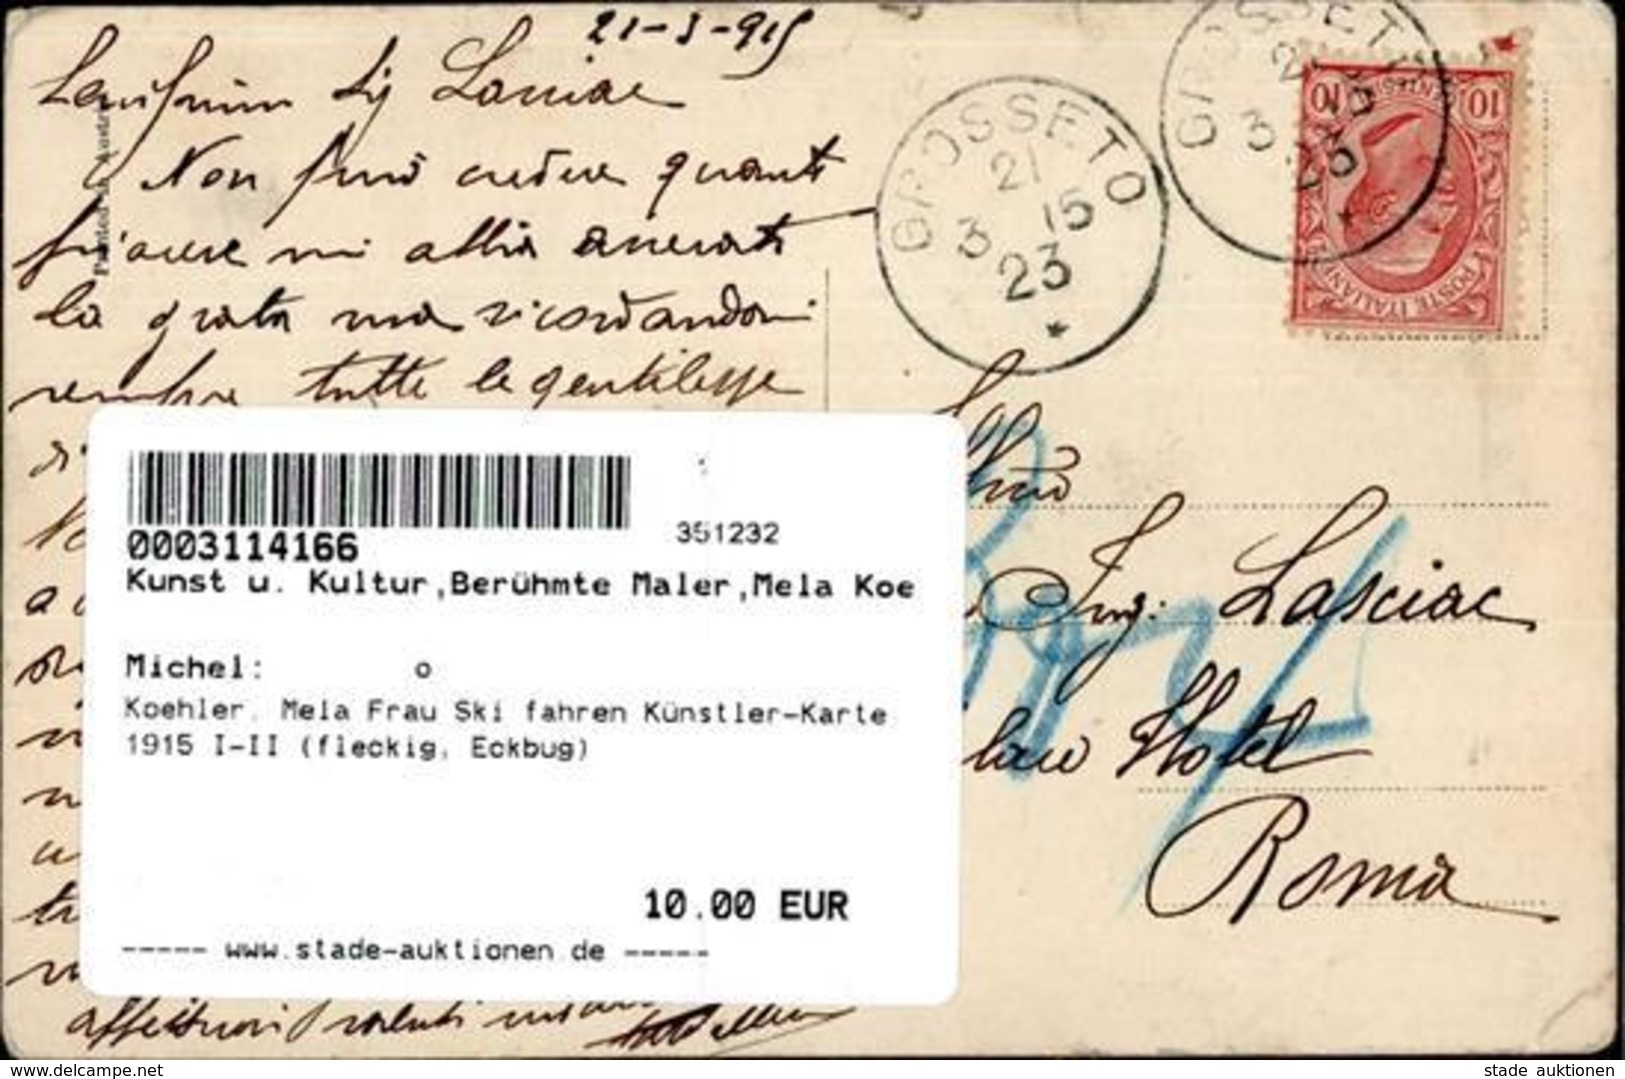 Koehler, Mela Frau Ski Fahren Künstler-Karte 1915 I-II (fleckig, Eckbug) - Koehler, Mela